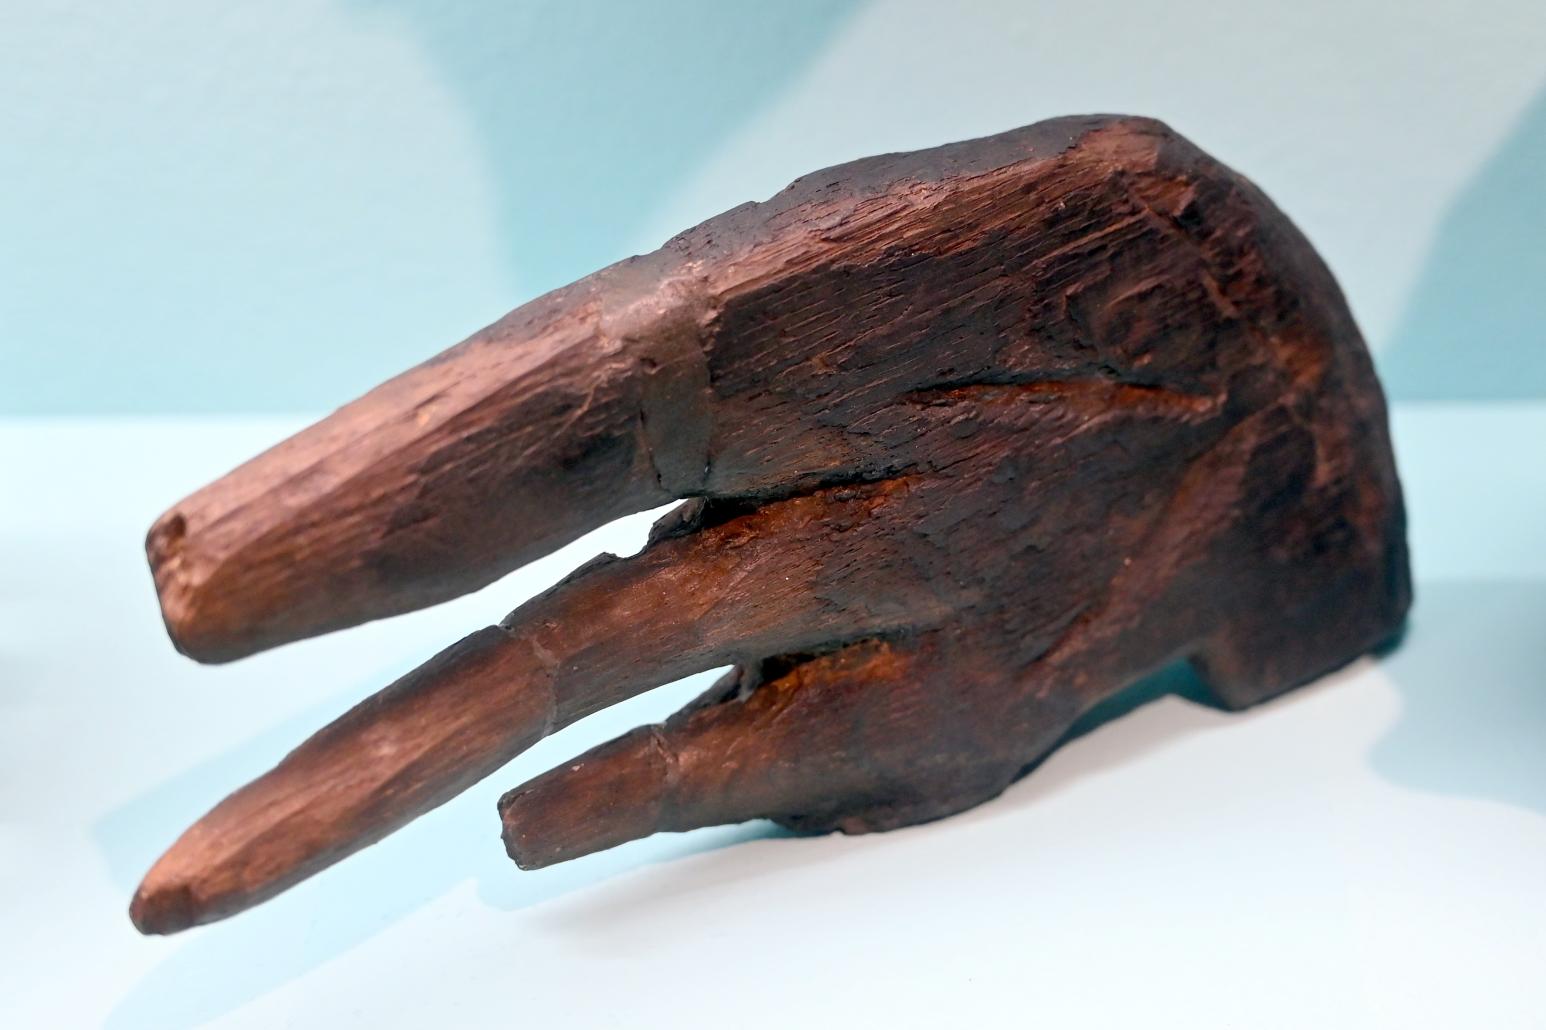 Holzgerät mit Zinken, Neolithikum (Jungsteinzeit), 5500 - 1700 v. Chr., 5300 - 4950 v. Chr.